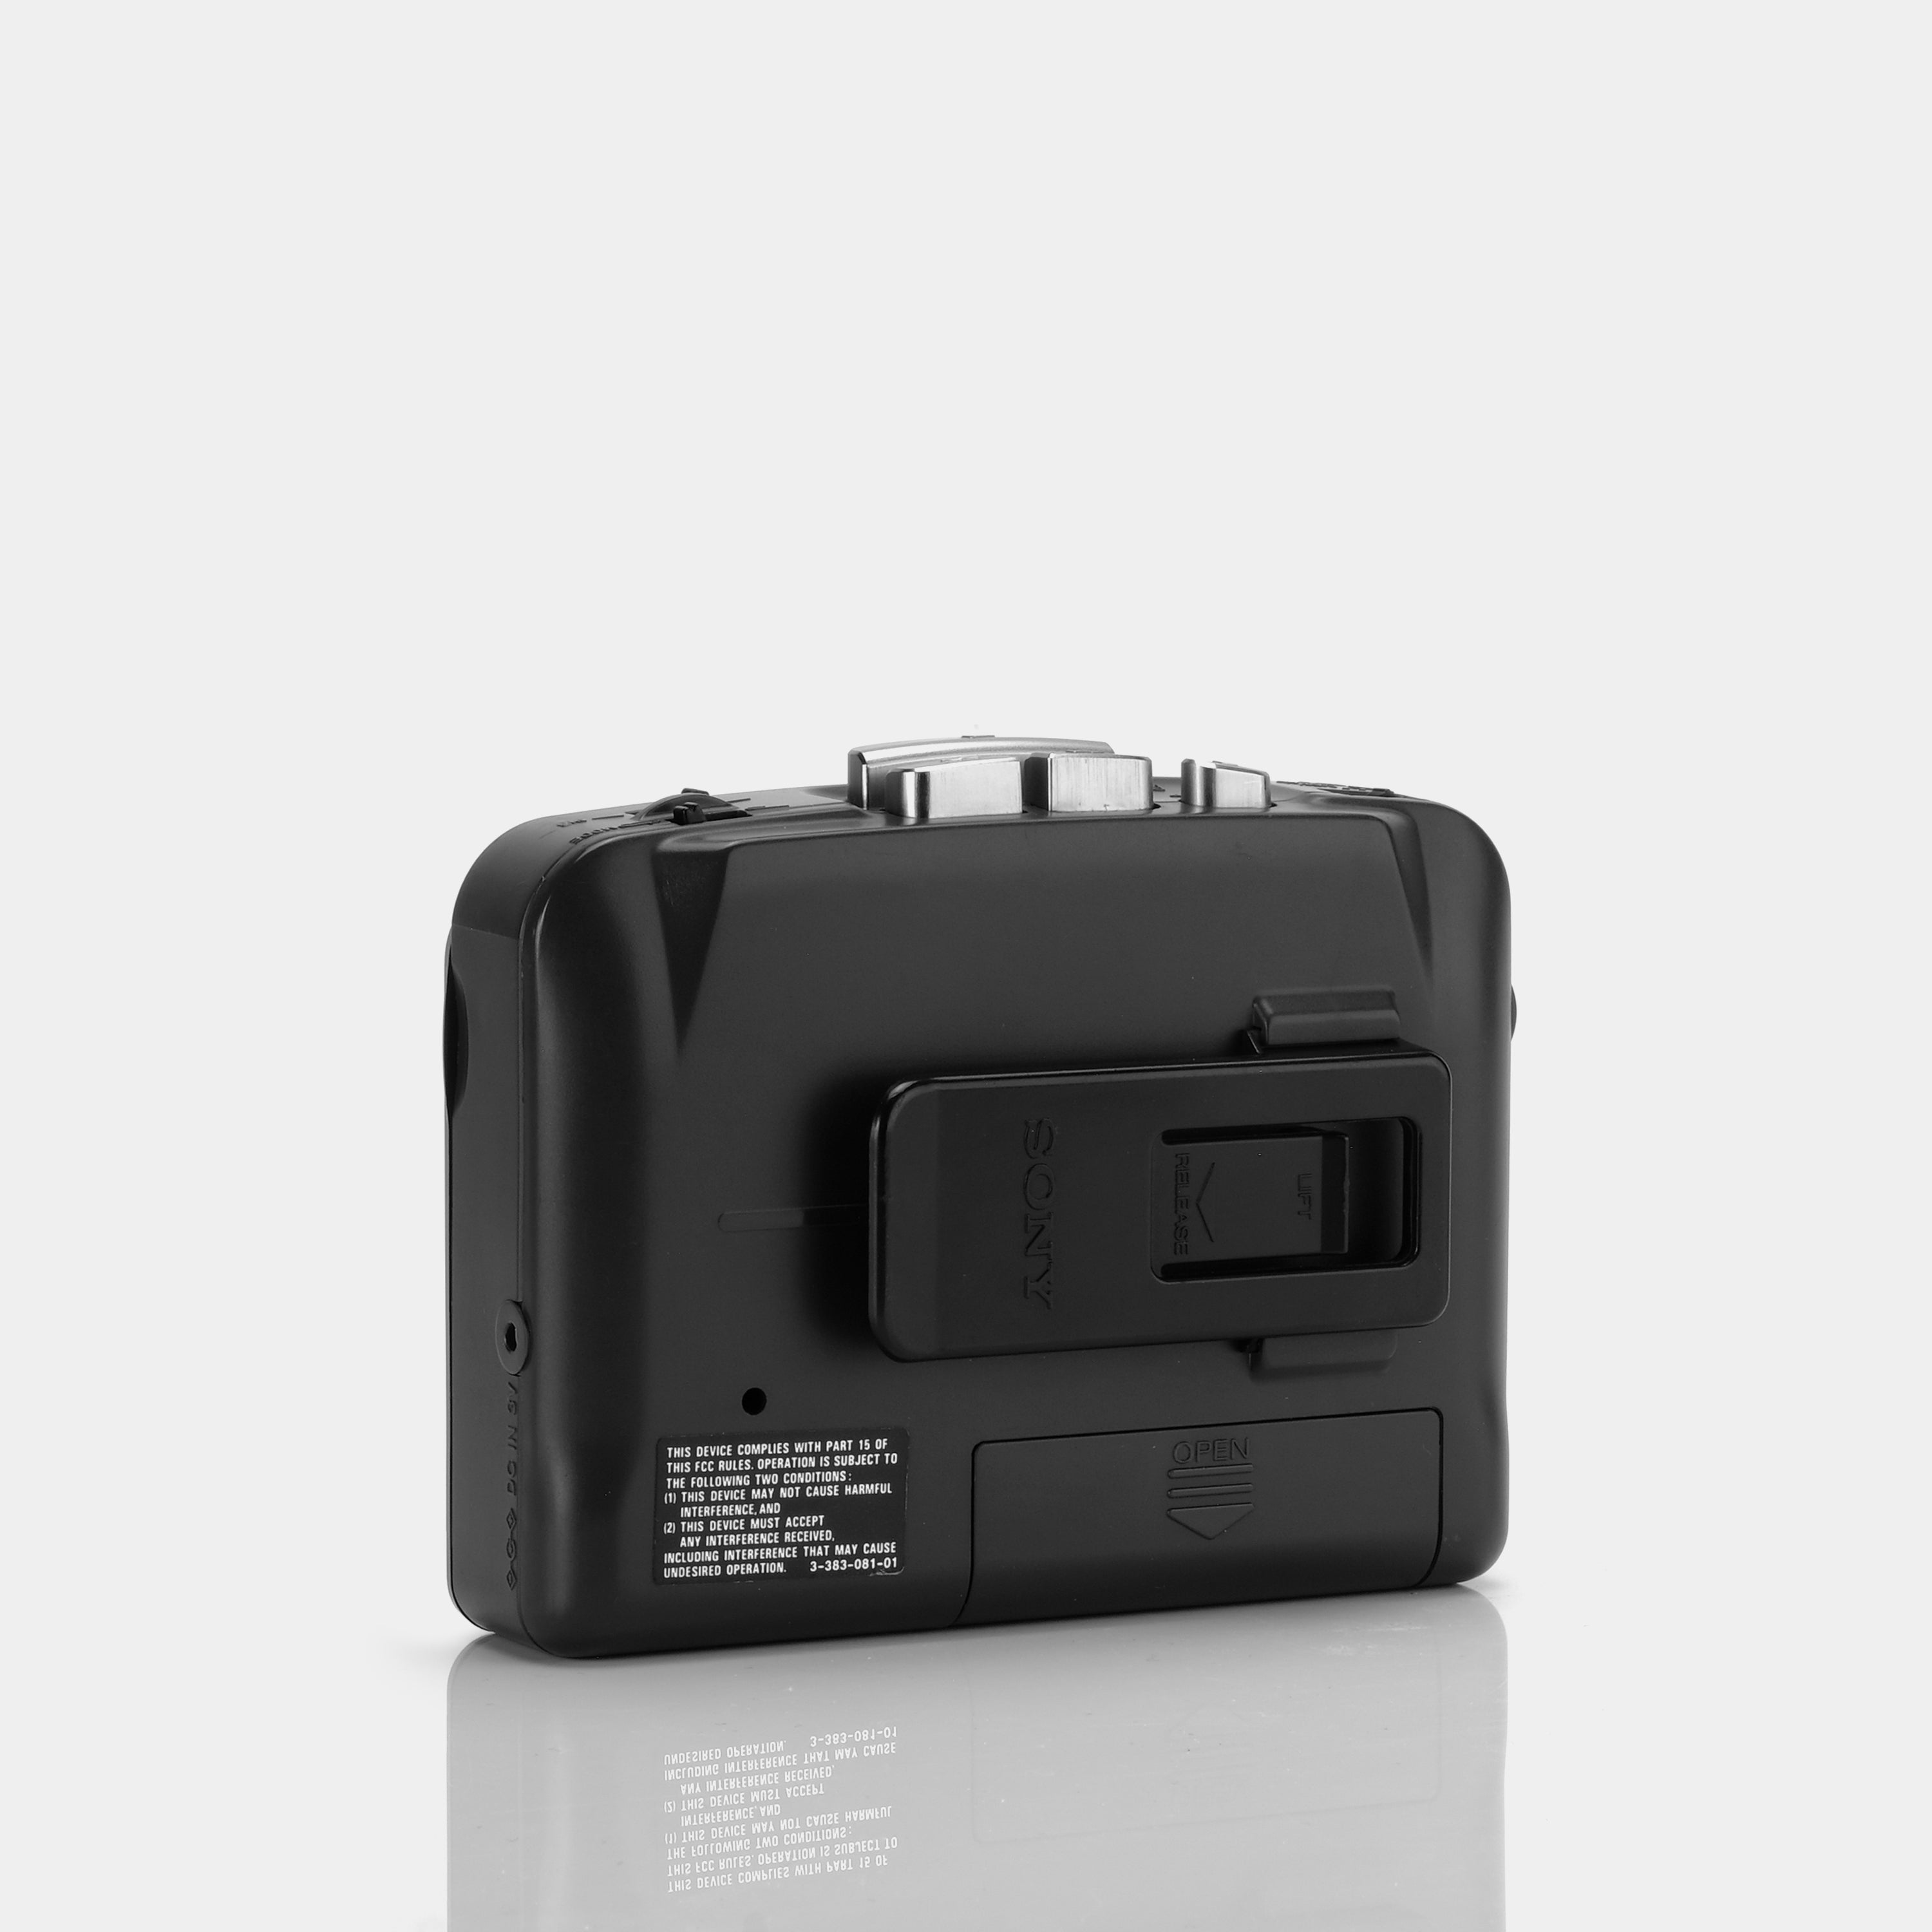 Sony Walkman WM-FX425 Auto Reverse AM/FM Portable Cassette Player